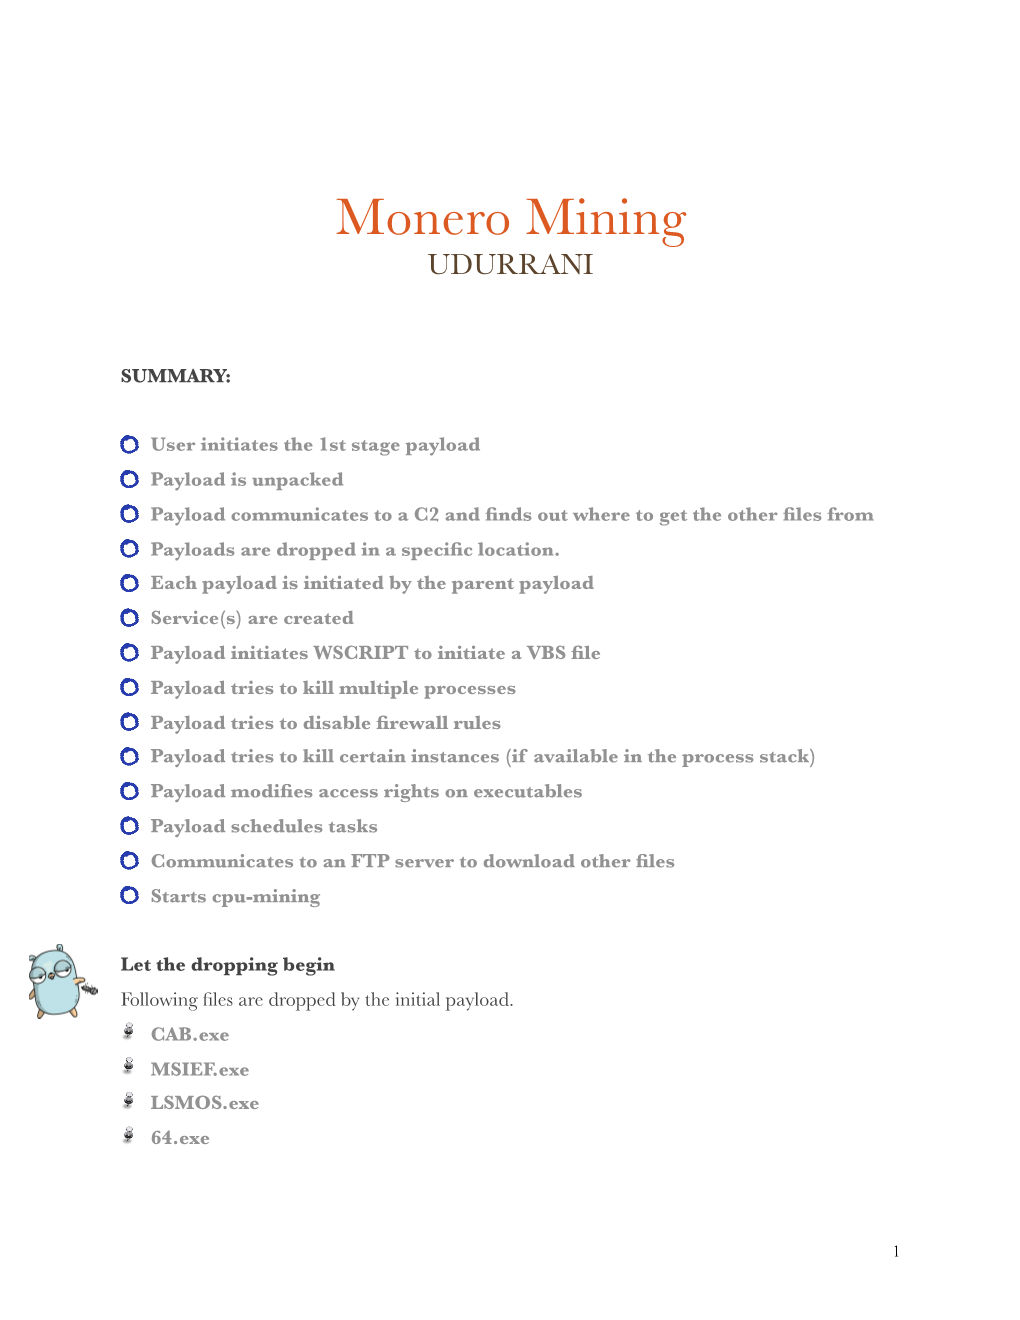 Monero Mining UDURRANI